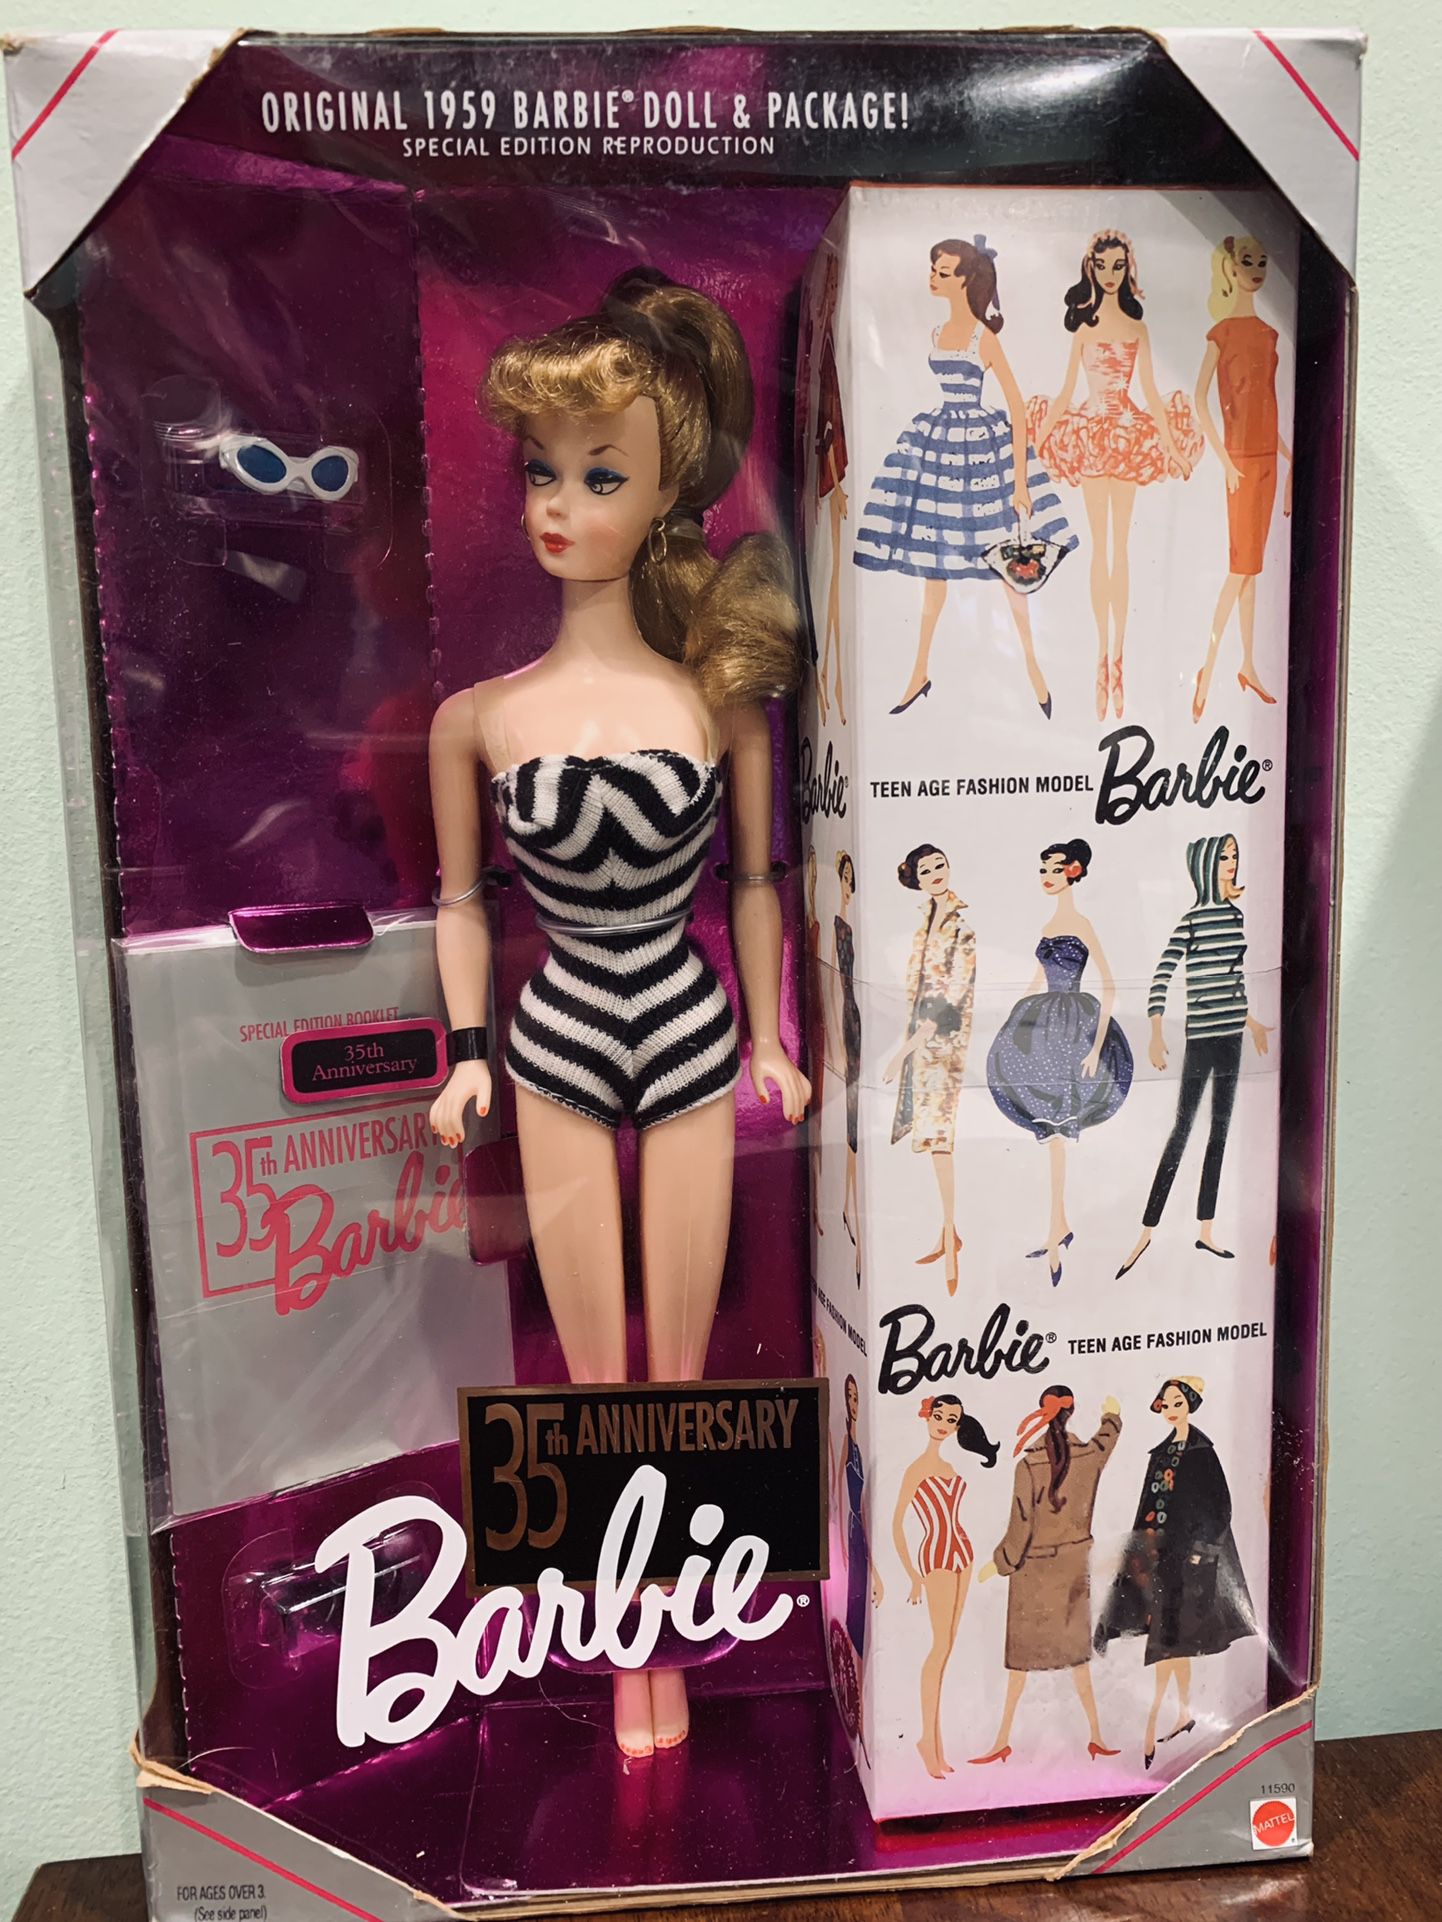 Original 1959 Sealed Barbie Doll & Package!  Vintage Reproduction